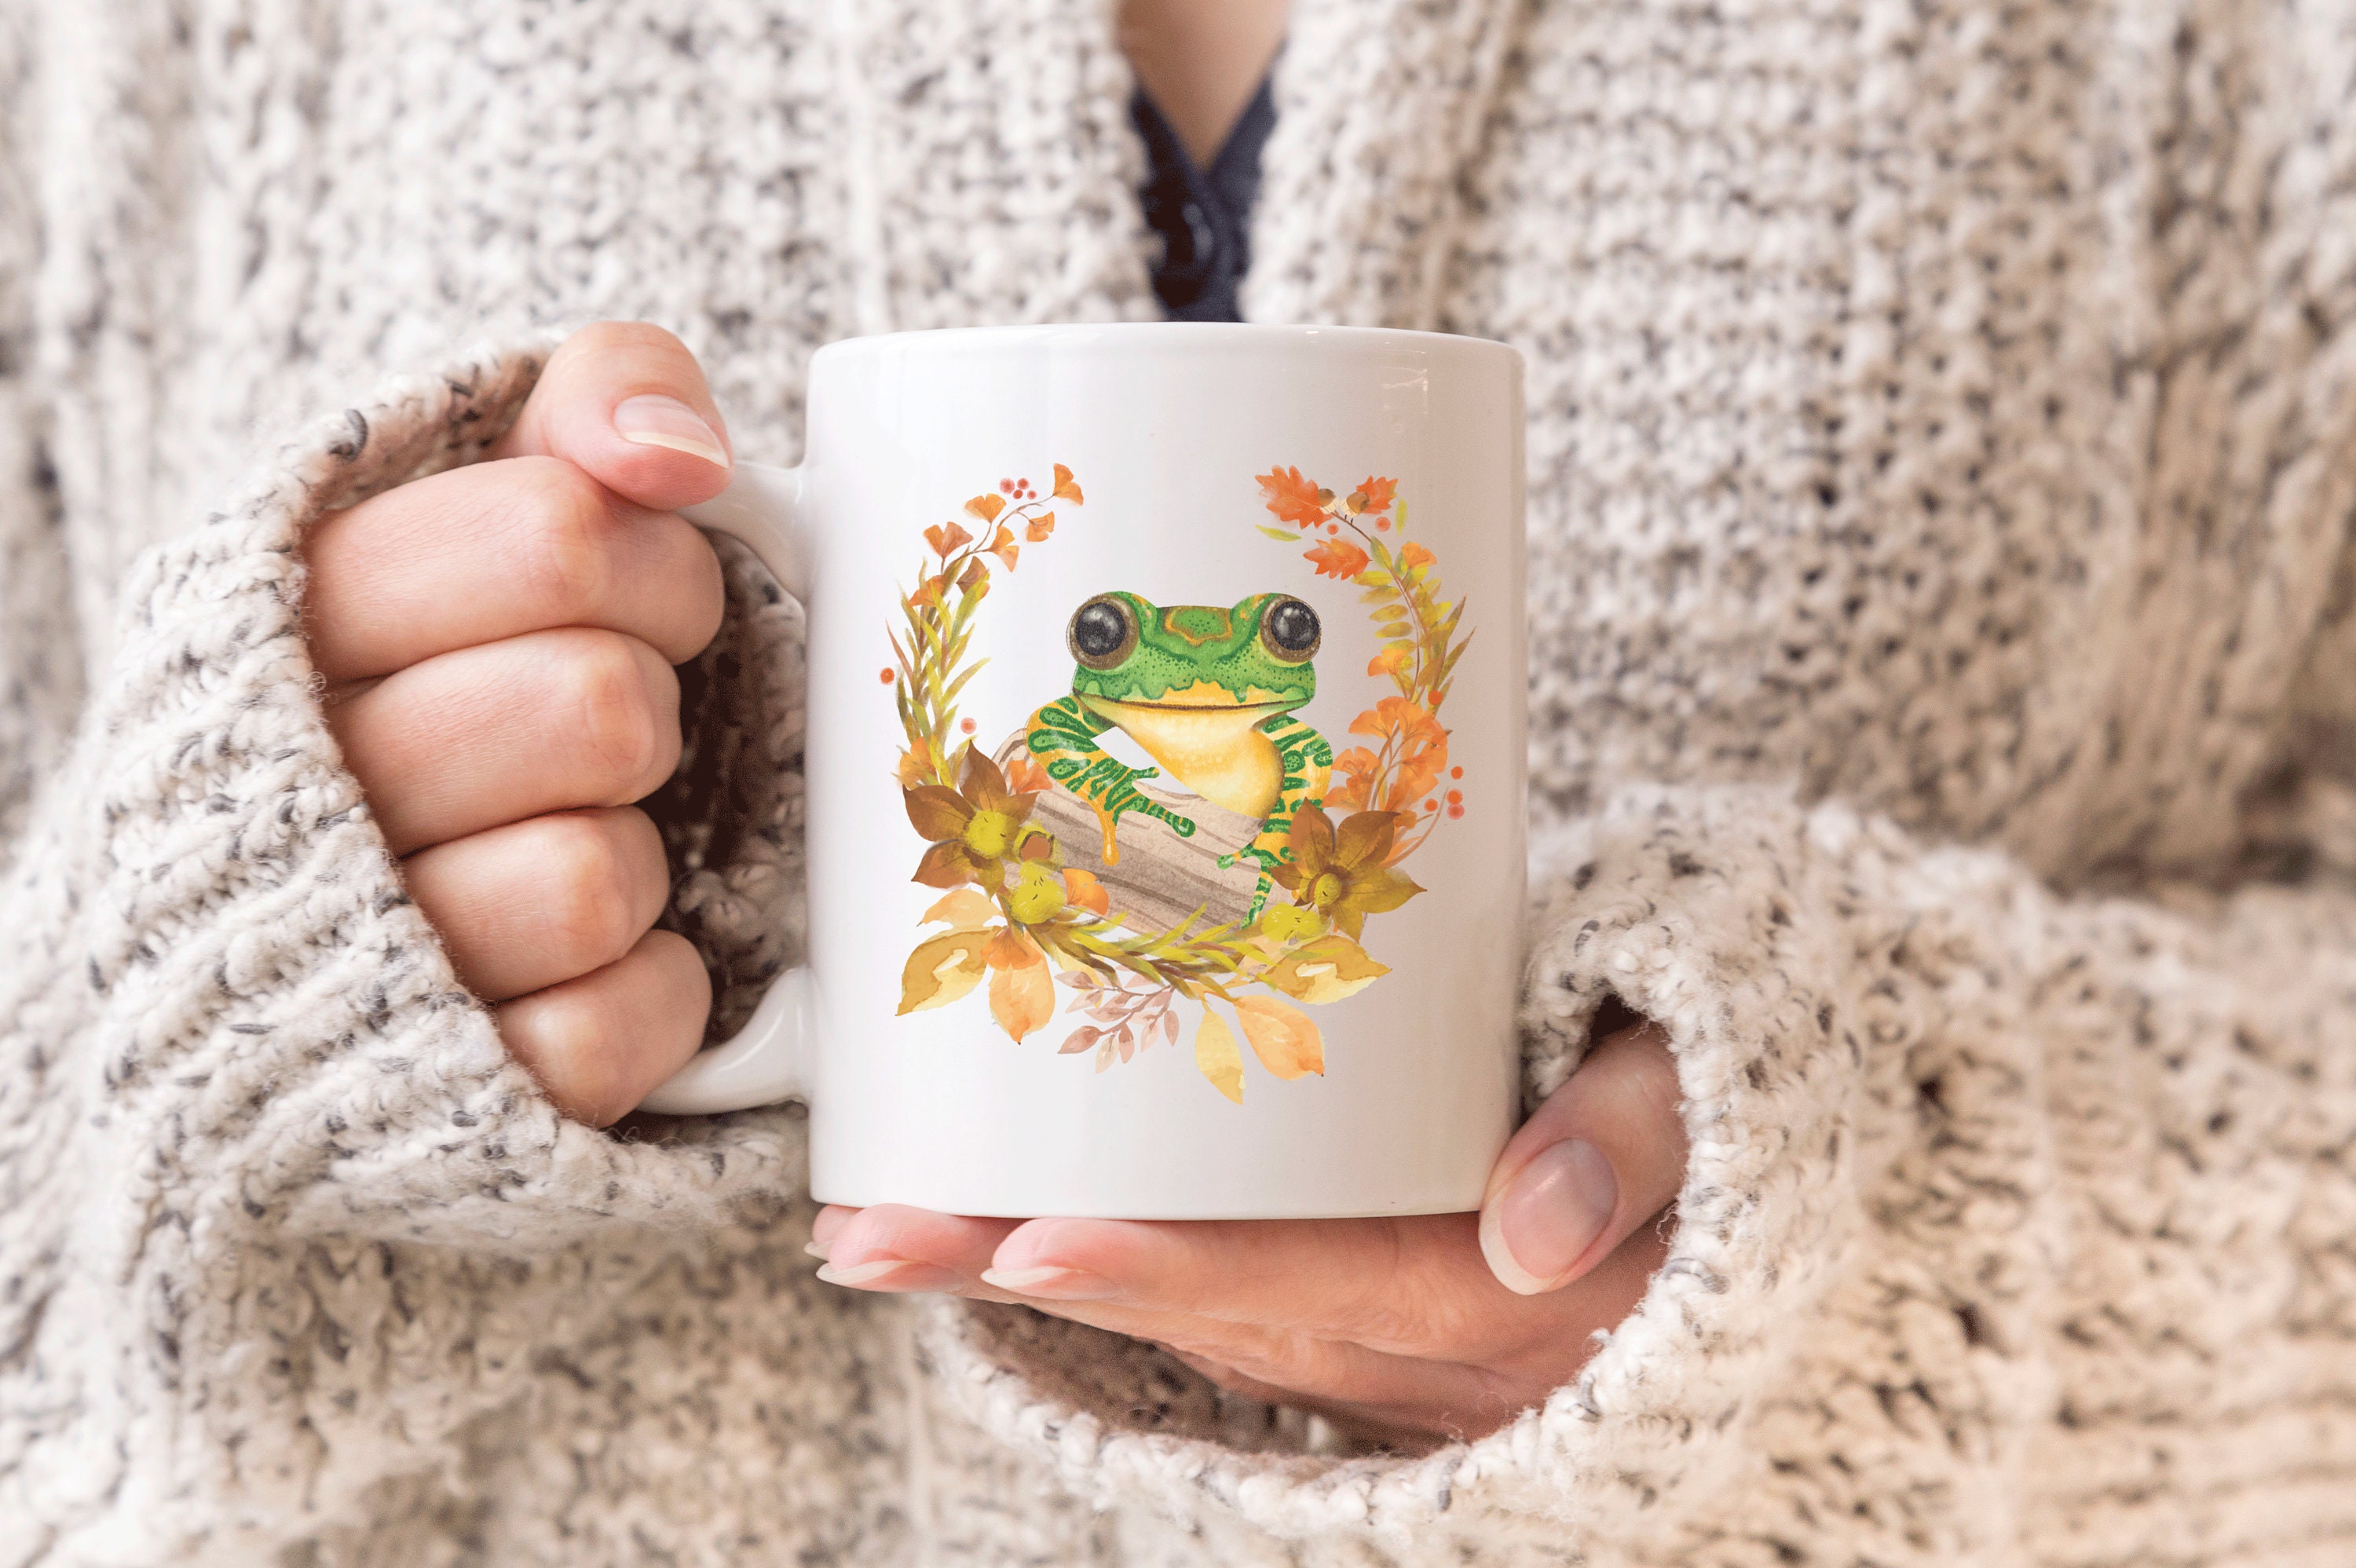 Mom's Daily Affirmations Mug - Mama Mug - Gift for New Mom - Mother's –  Running Frog Studio